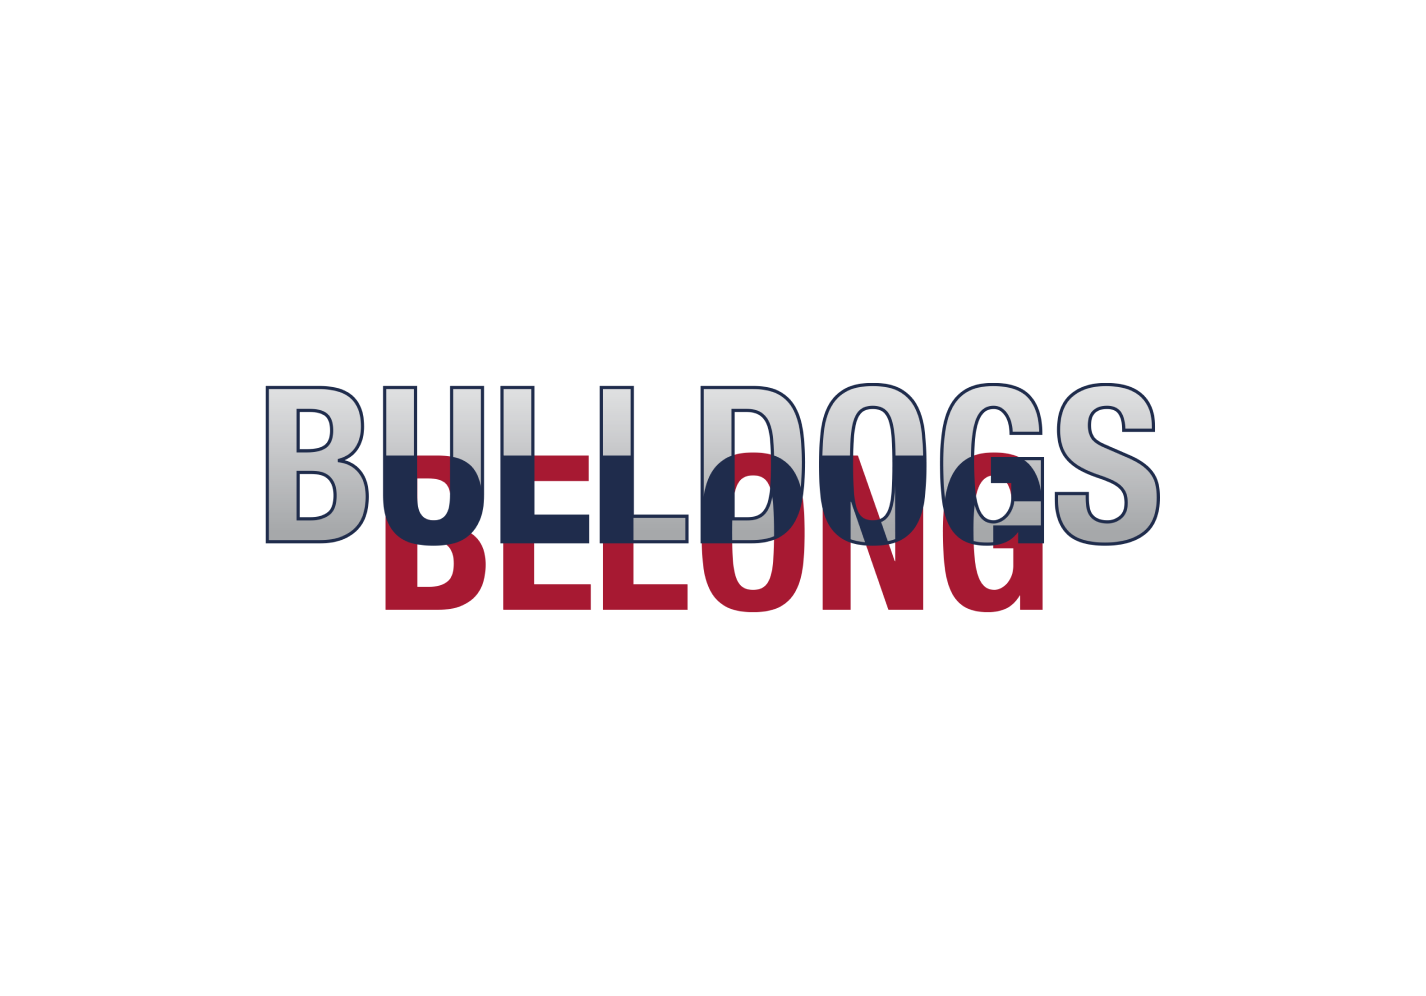 Bulldogs Belong decorative text wordmark, "bulldogs belong" words layered on top of each